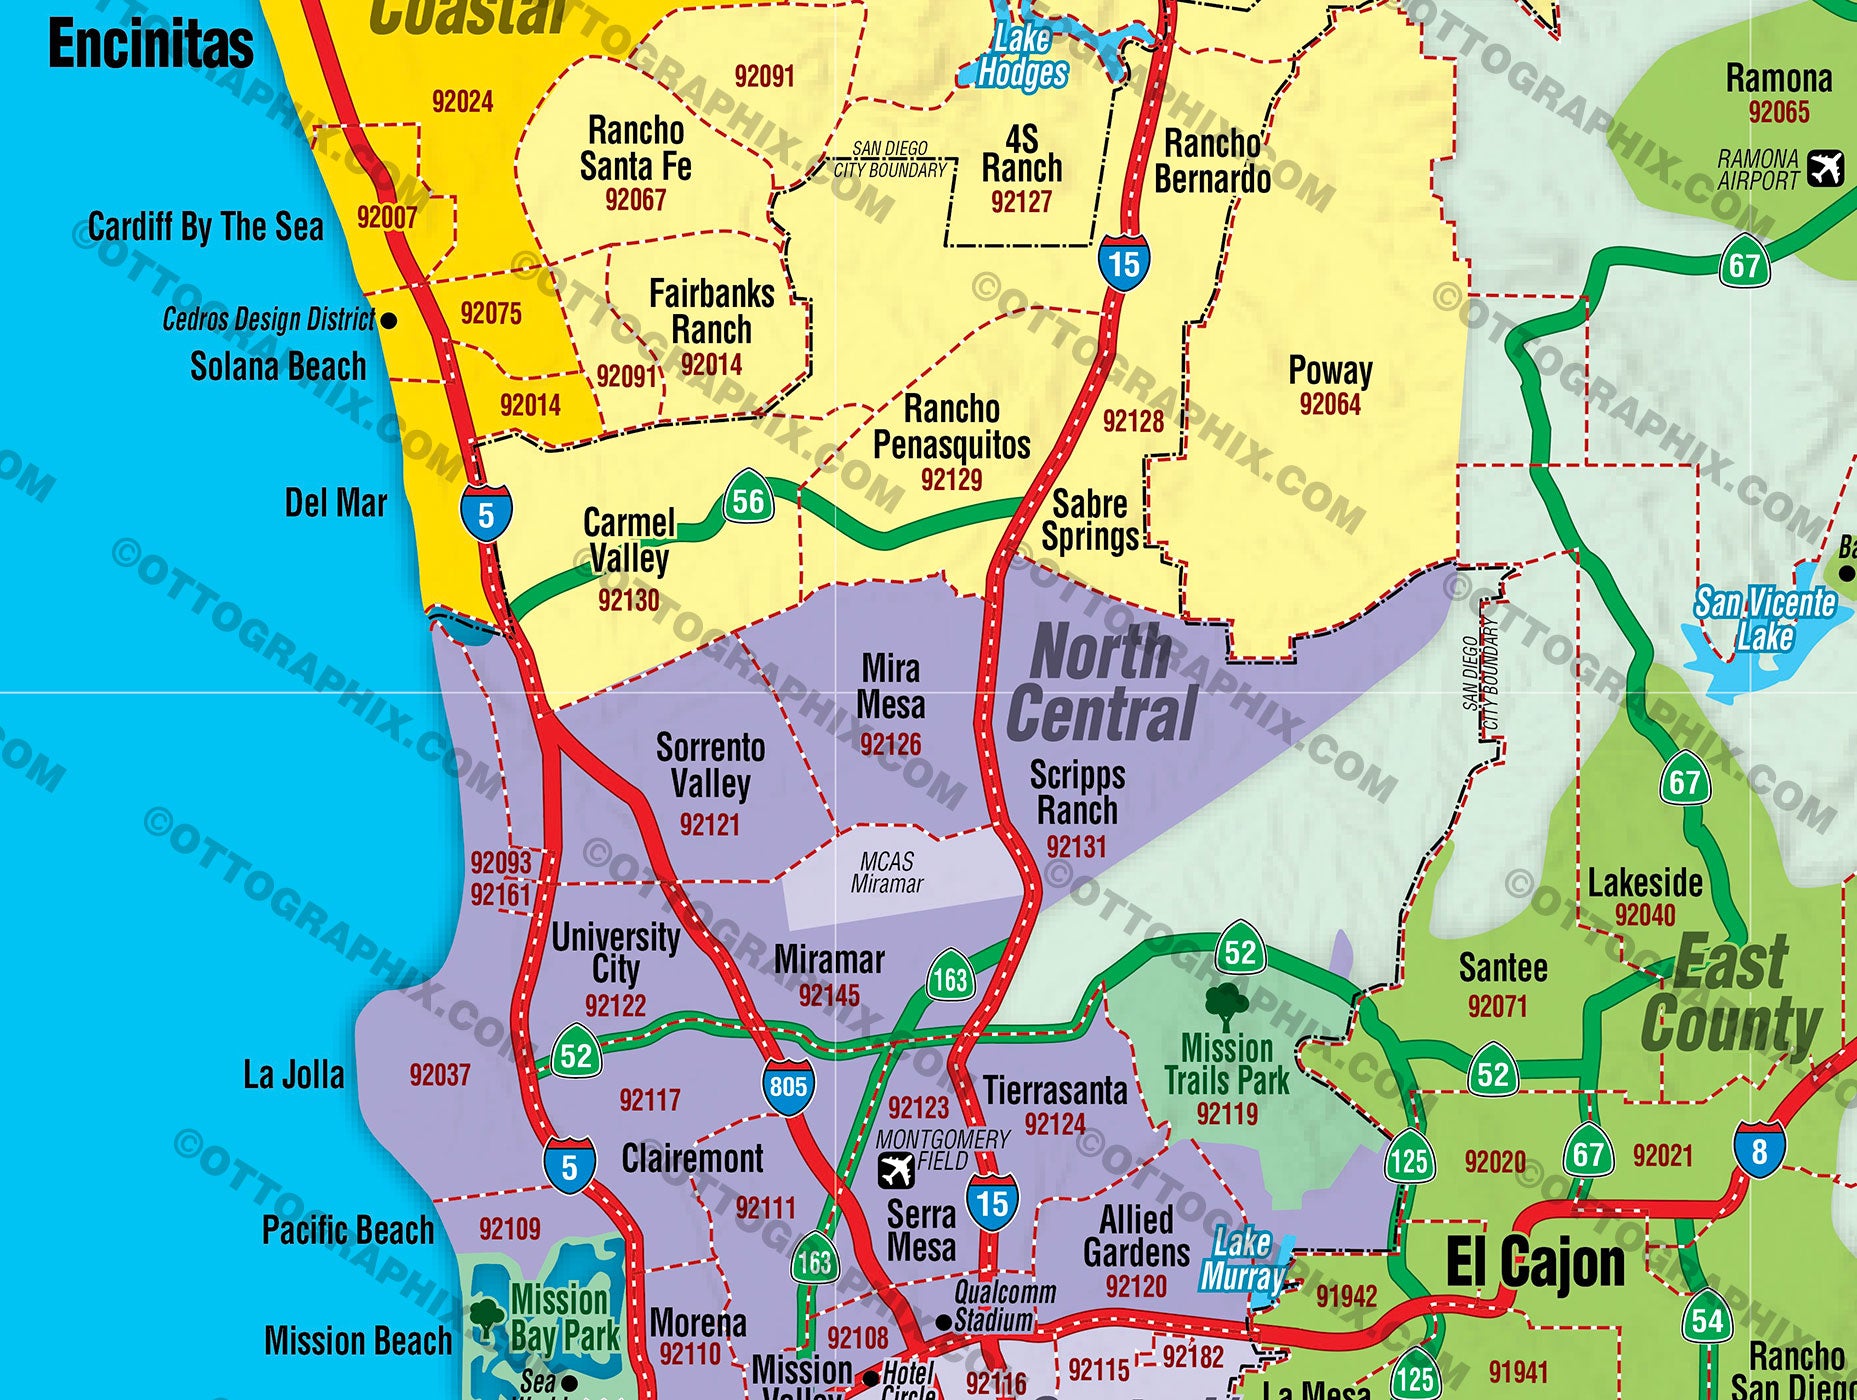 Printable San Diego County Zip Code Map